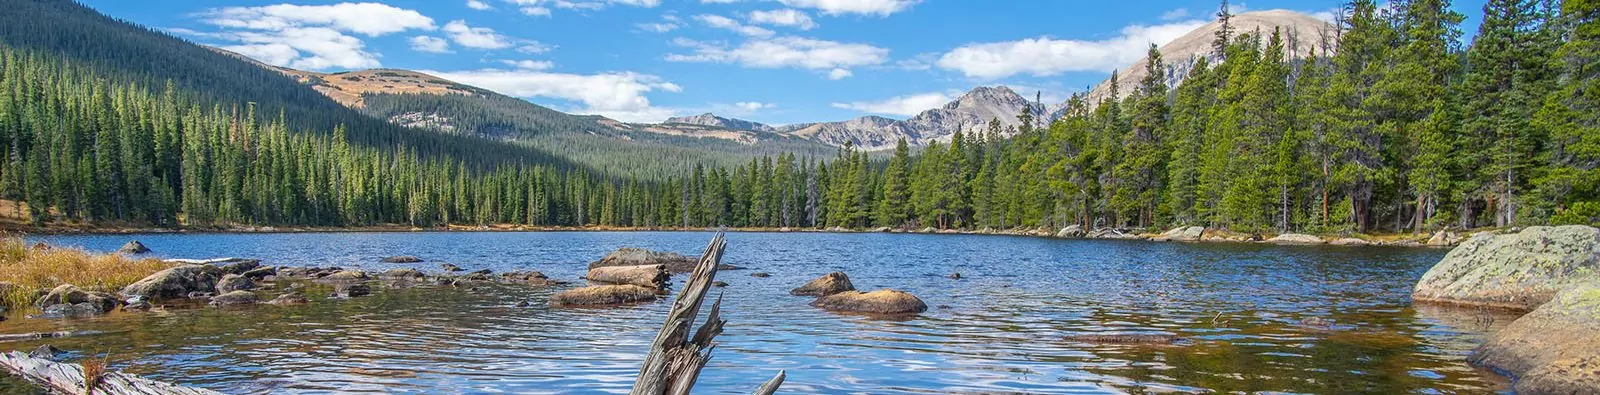 Beautiful mountain lake in Rocky Mountain National Park